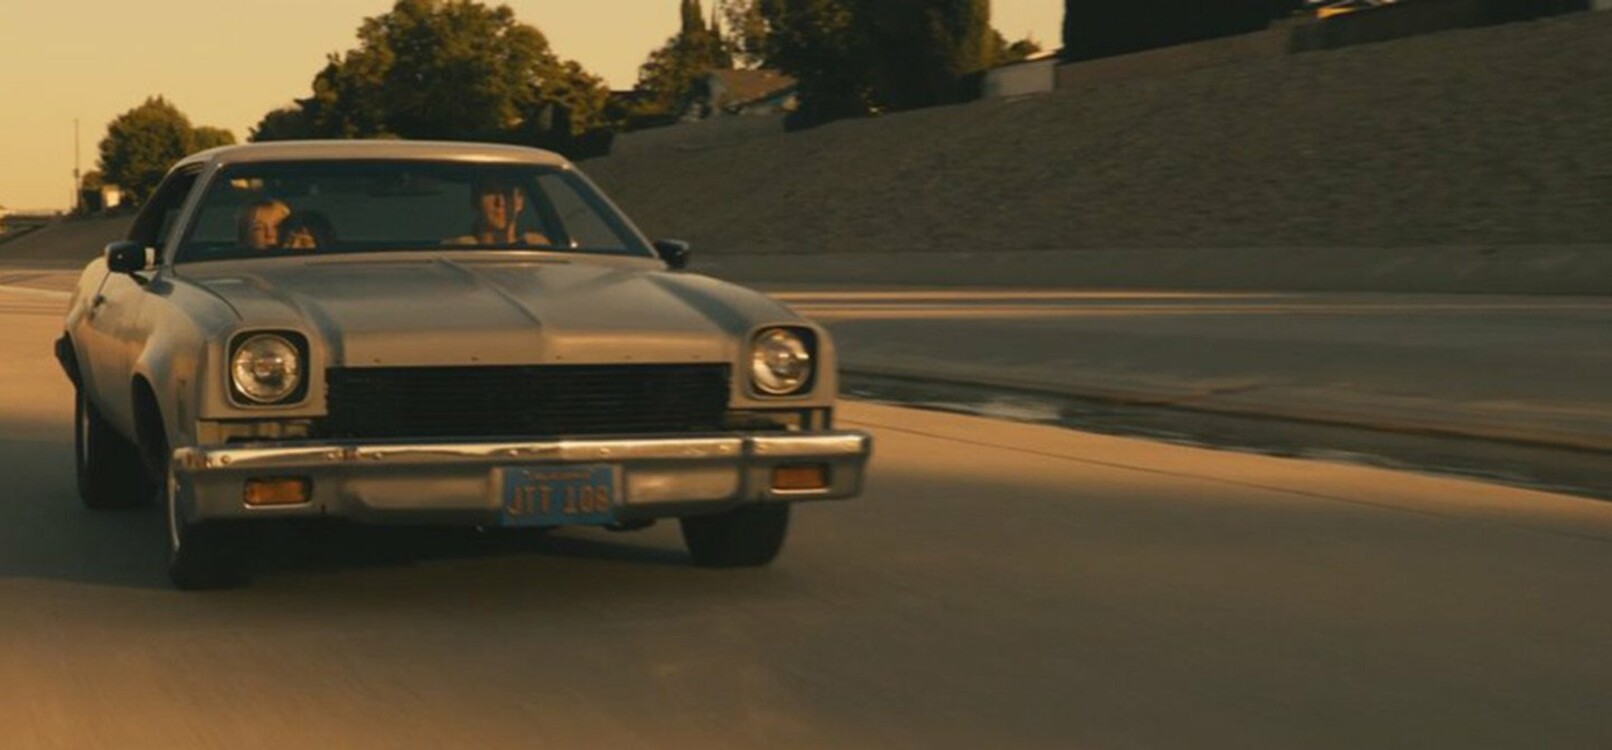 1973 Chevrolet Chevelle Malibu из фильма «Драйв», 2011